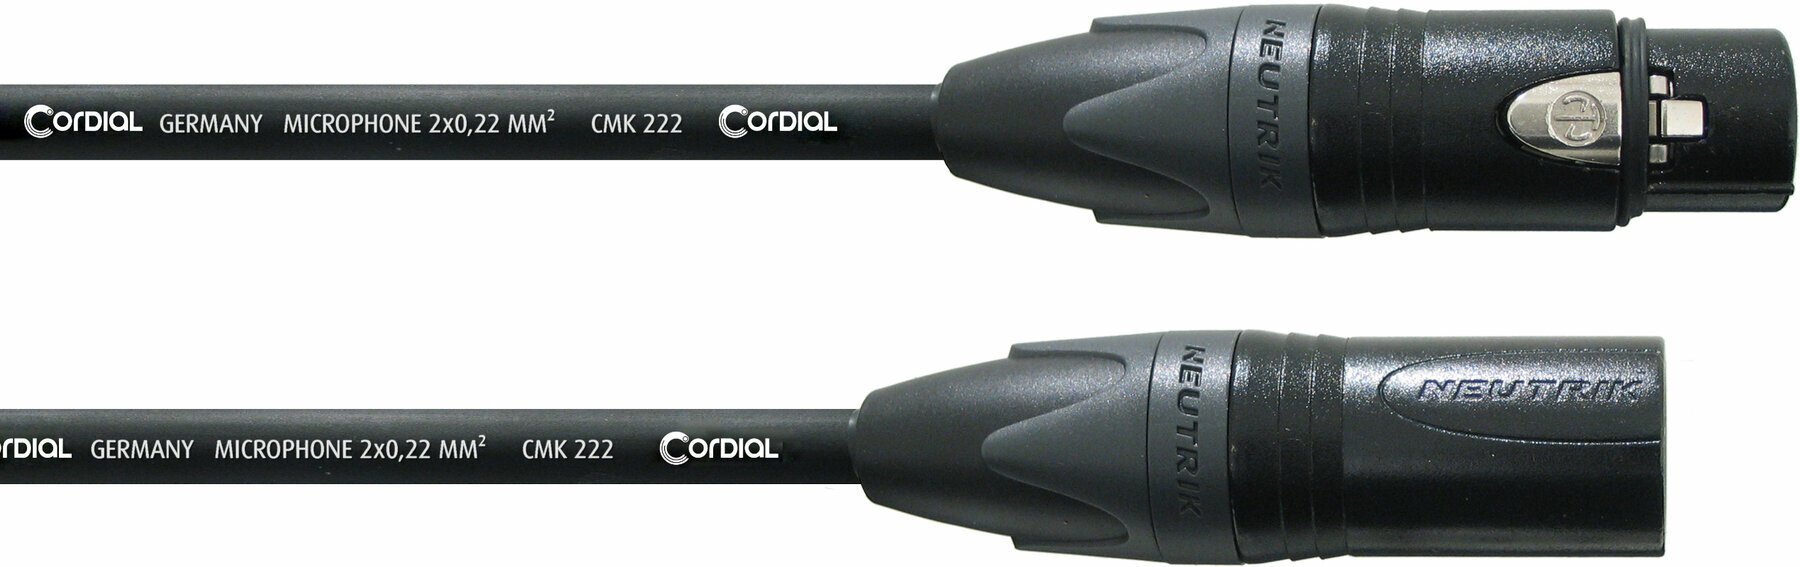 Mikrofonkabel Cordial CPM 10 FM Schwarz 10 m